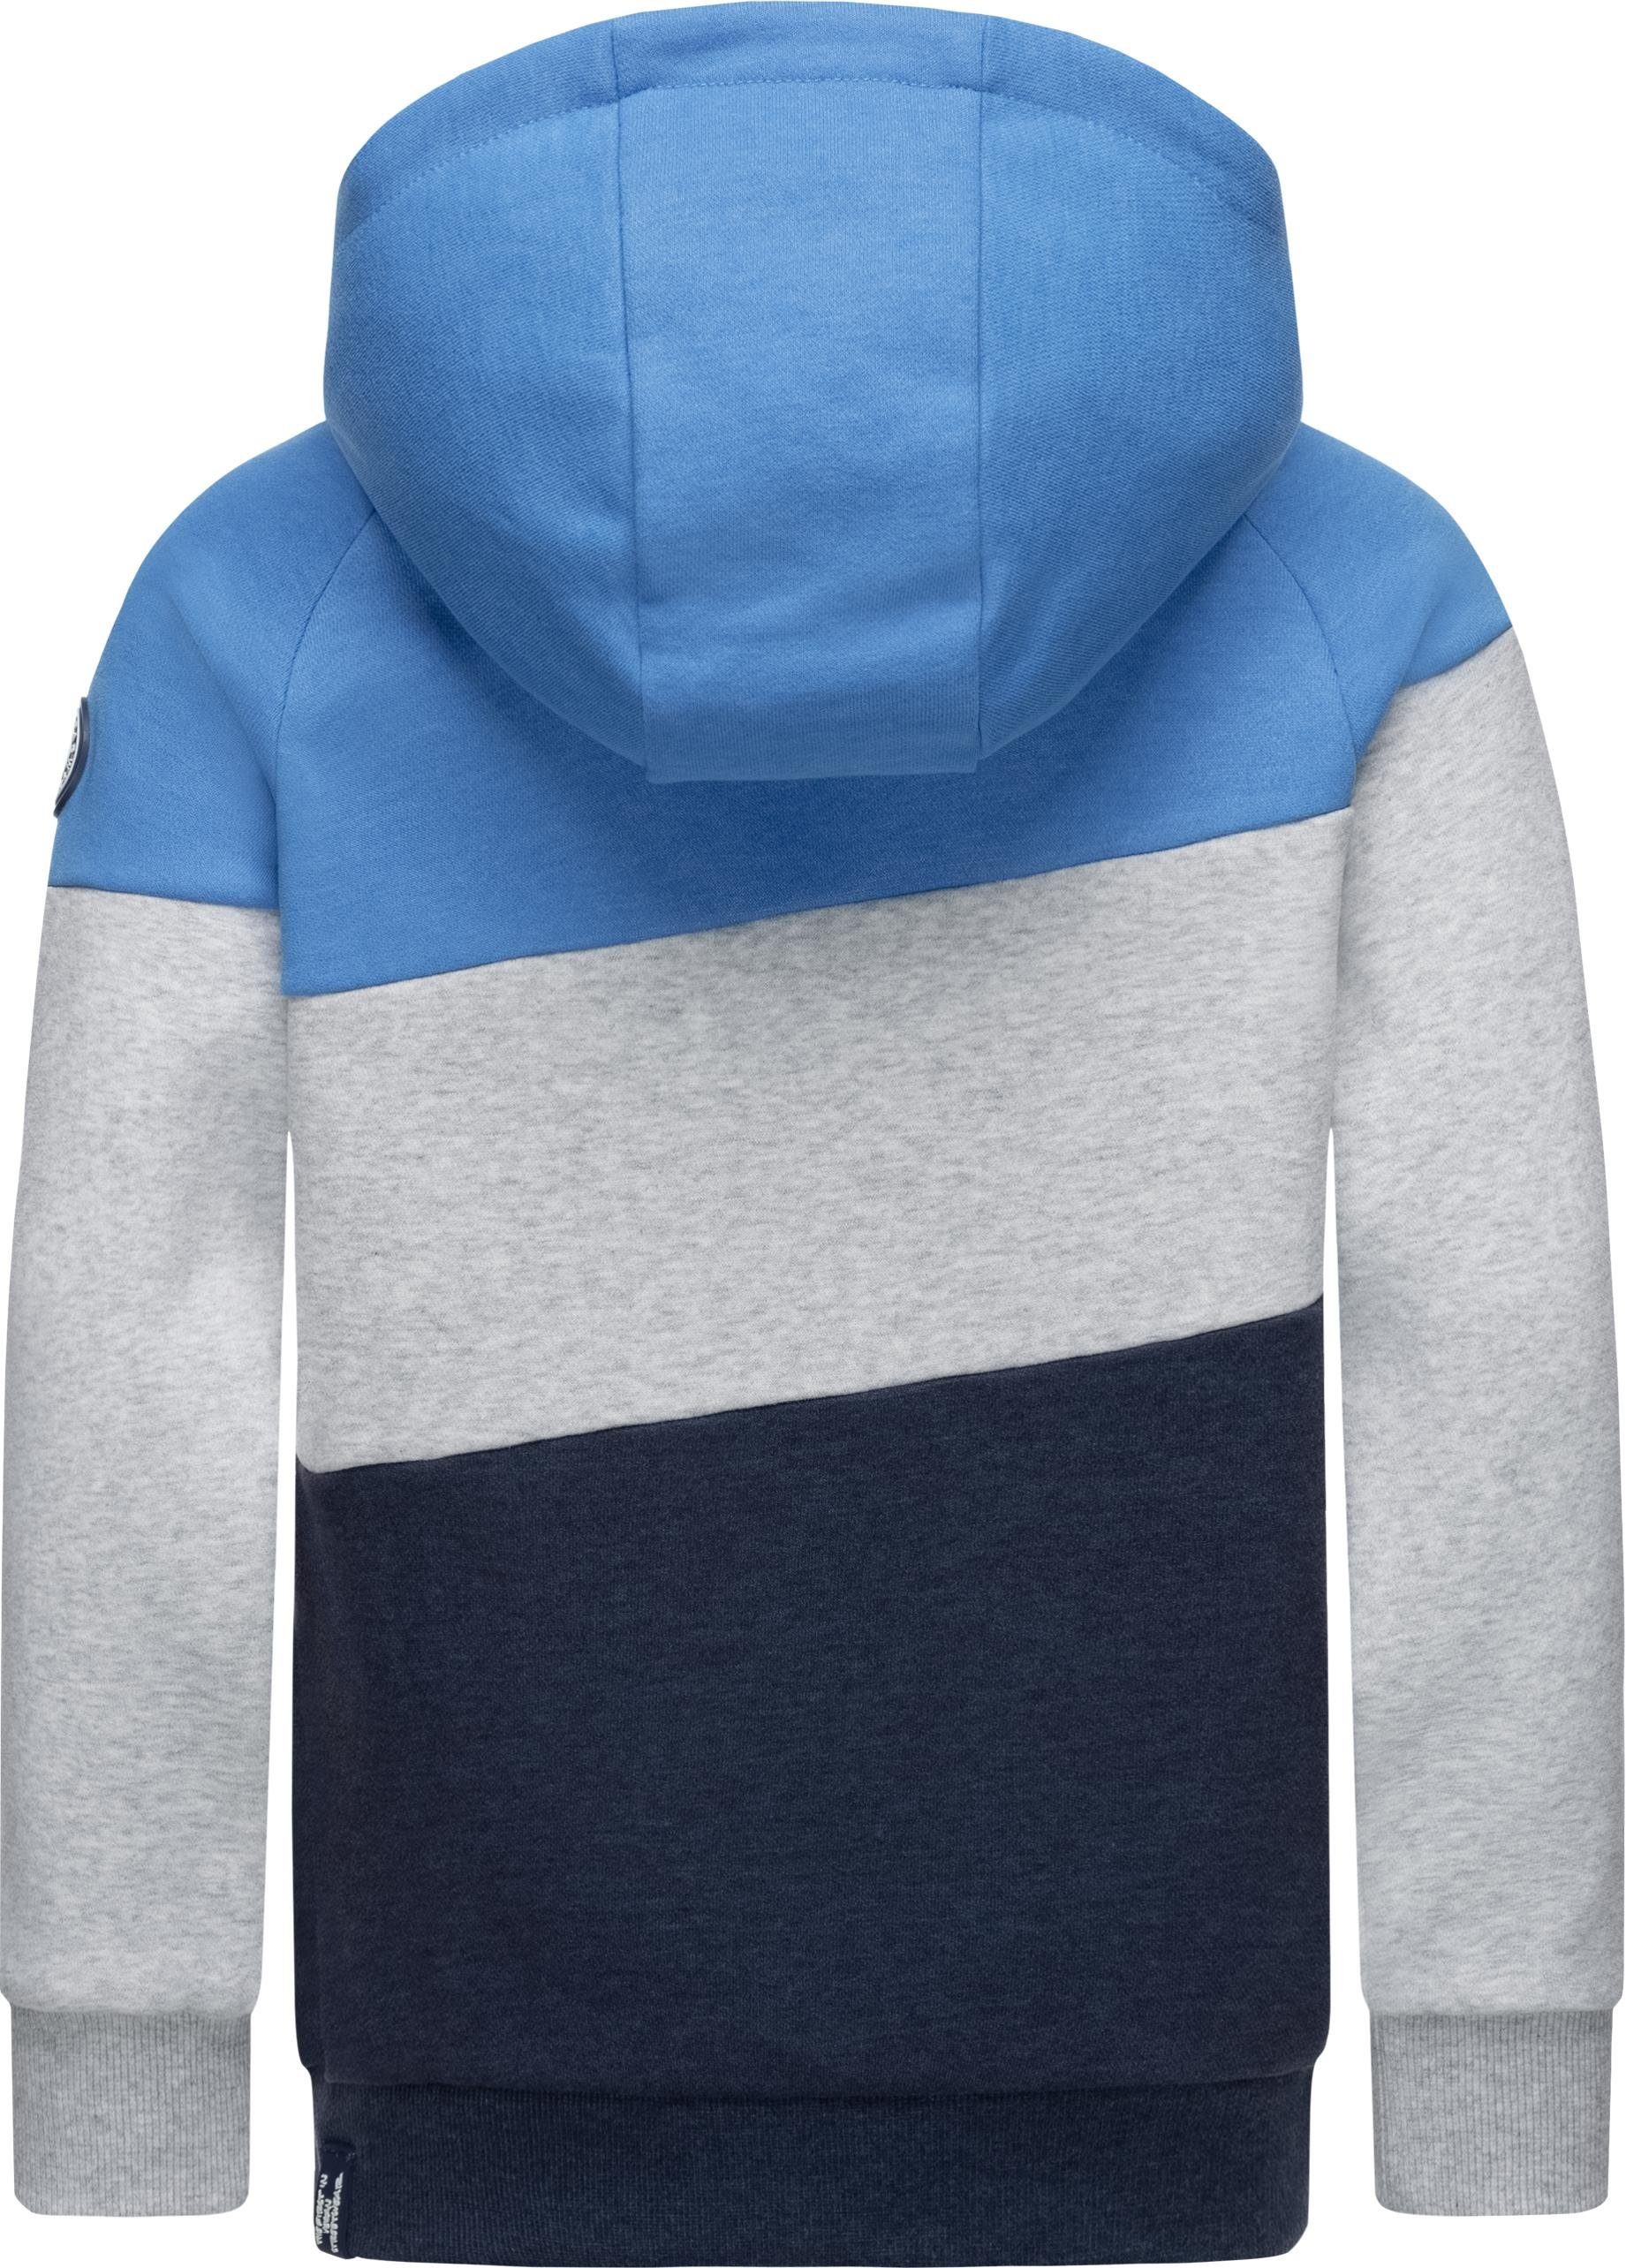 blau Kinder Ragwear mit Jungen Vendio großer Kapuzenpullover Kapuze Kapuzensweater